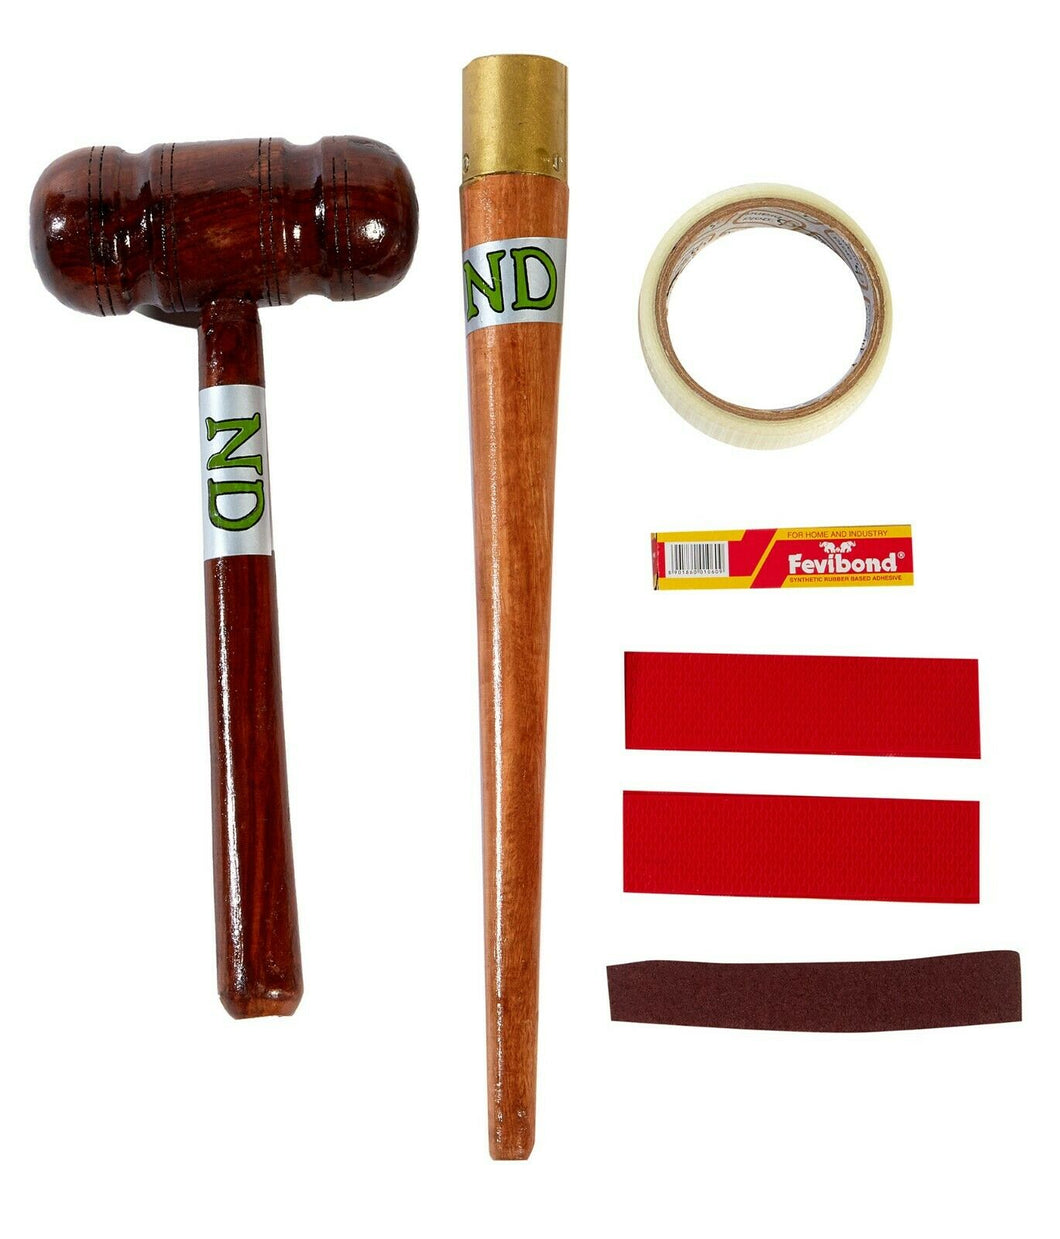 ND Cricket Toe Guard Cricket Bat repair kit set protection & Grip Cone NEW